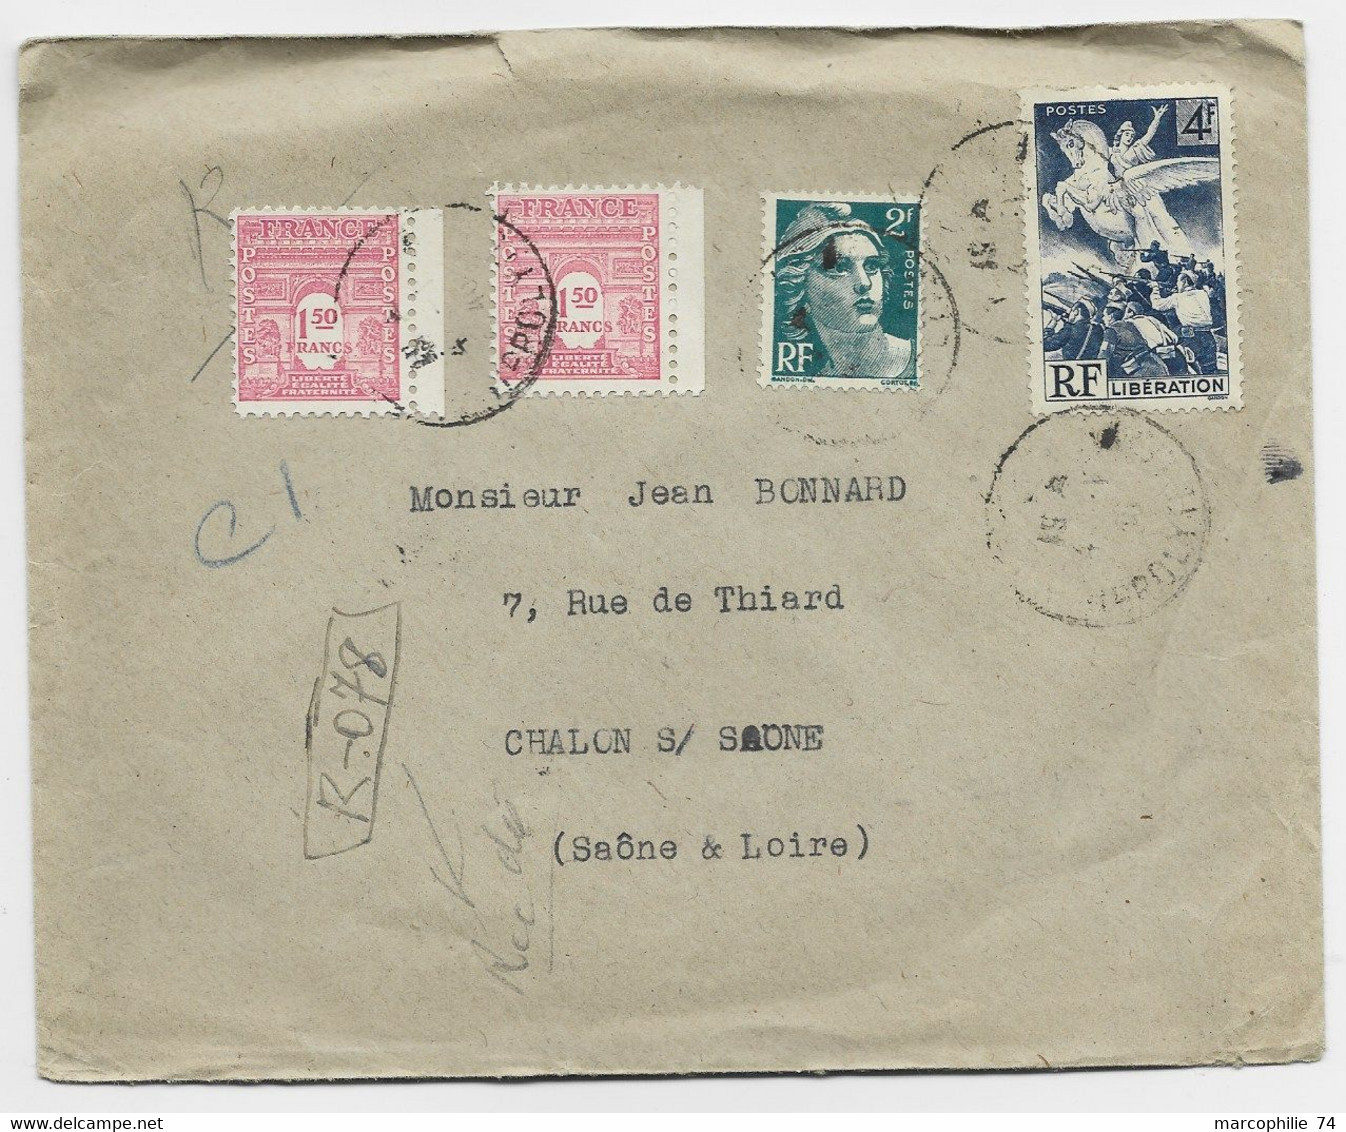 FRANCE ARC TRIOMPHE 1FR50 ROSEX2+ GANDON 2FR+ 4FR LIBERATION LETTRE REC PROVISOIRE PARIS 1946 AU TARIF - 1944-45 Triomfboog